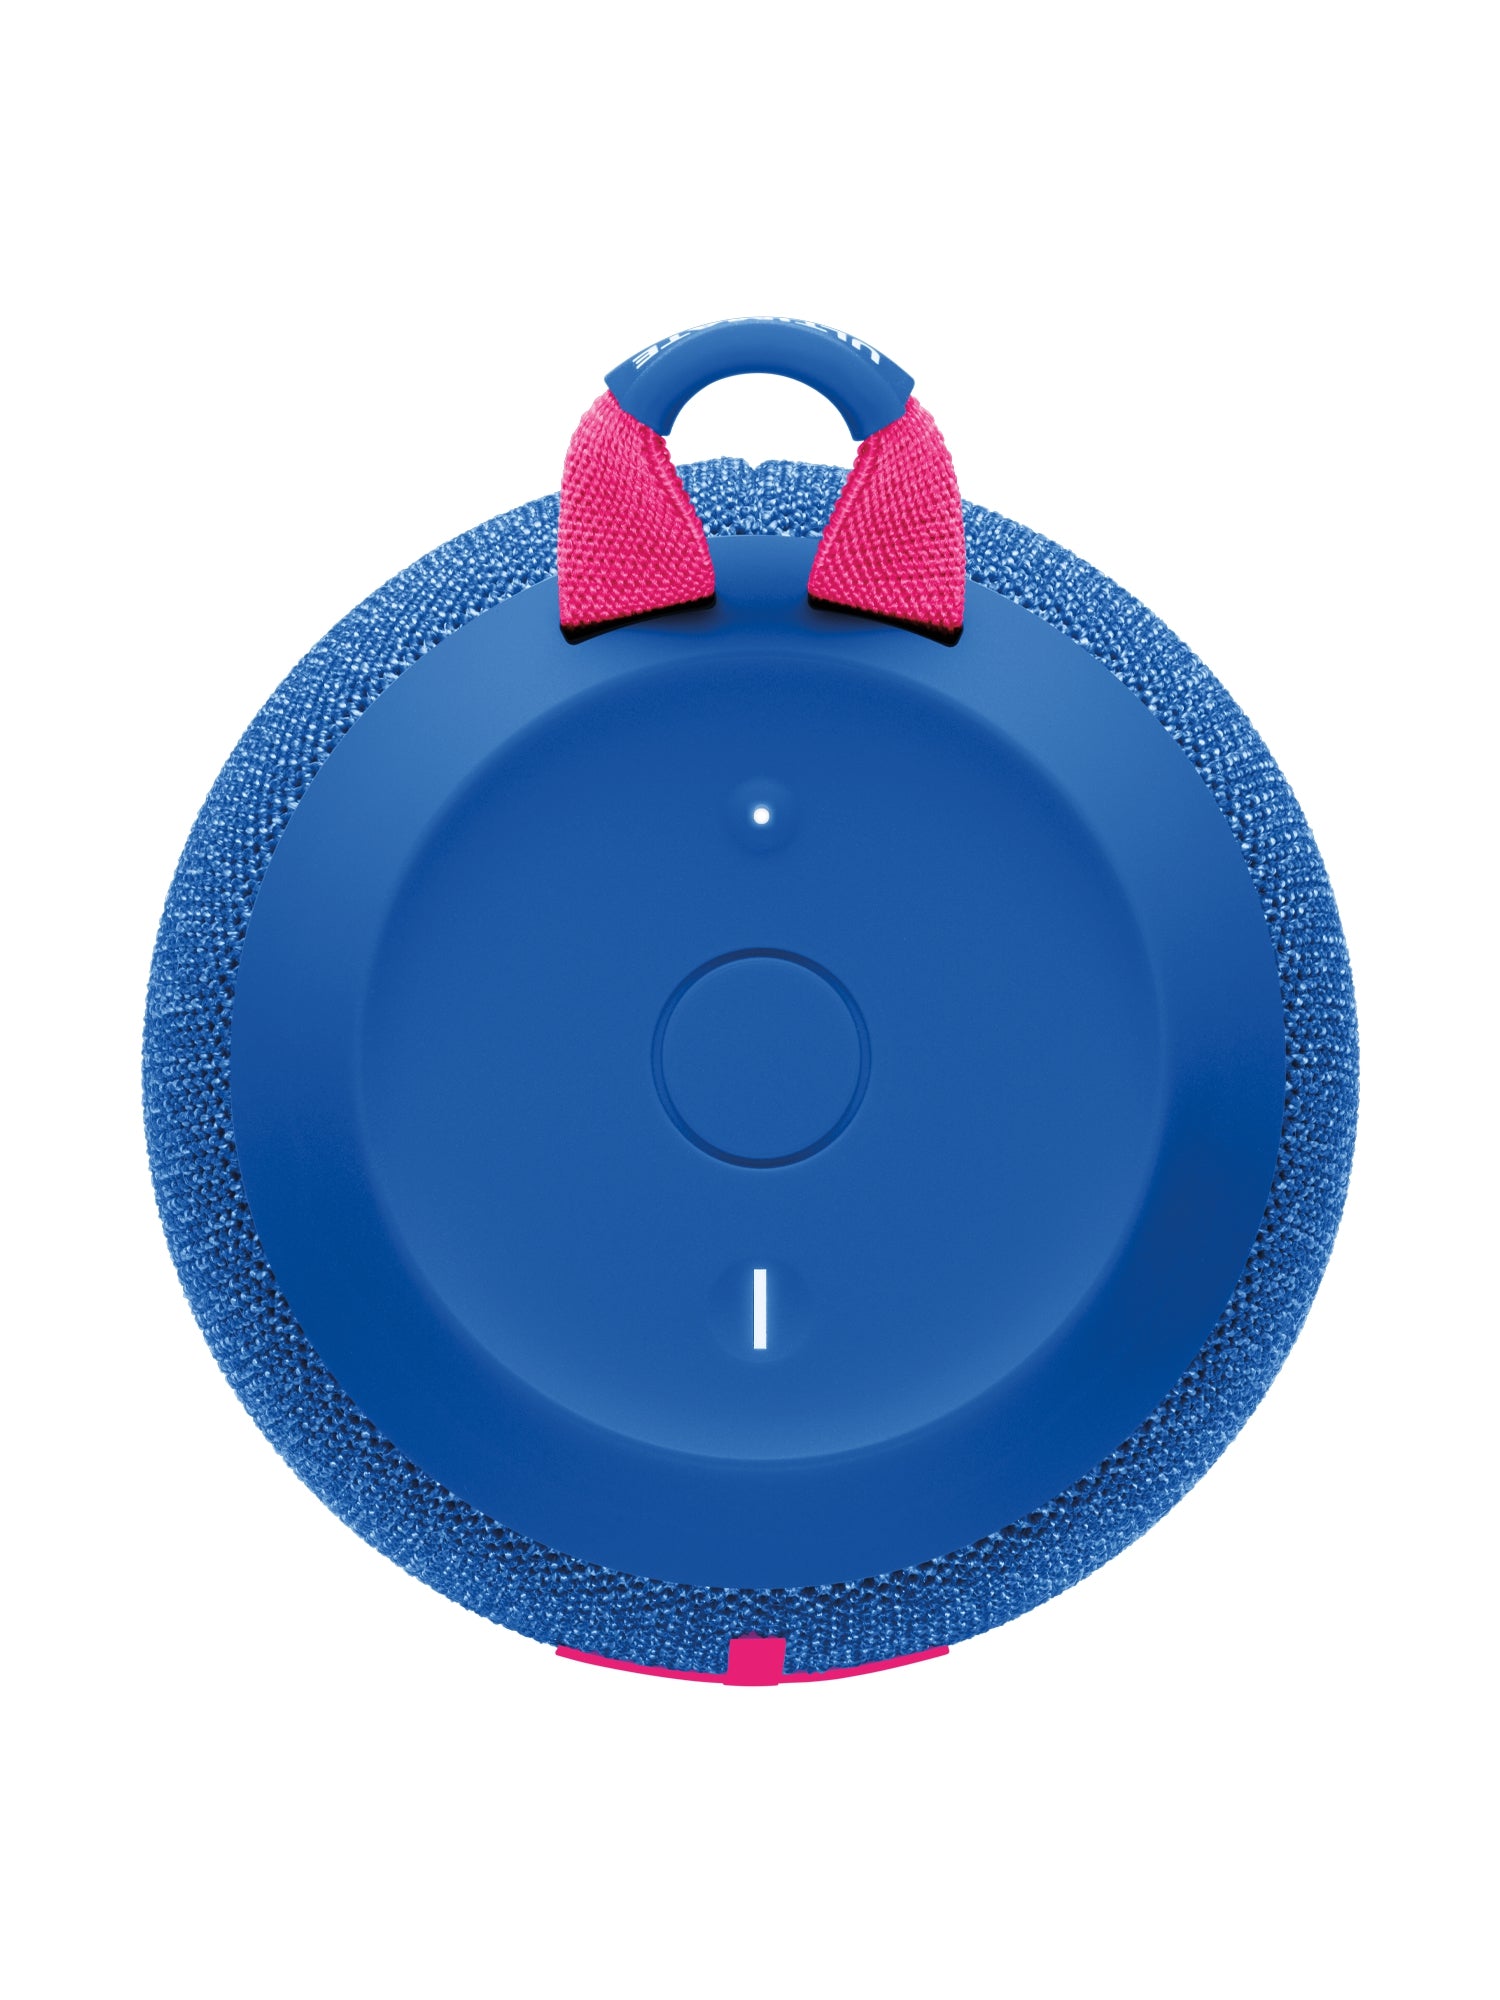 Bocina Ultimate Ears Wonderboom 3 Azul Portatil Bluetooth Ip67 Resistente Al Agua, Al Polvo Y Flota